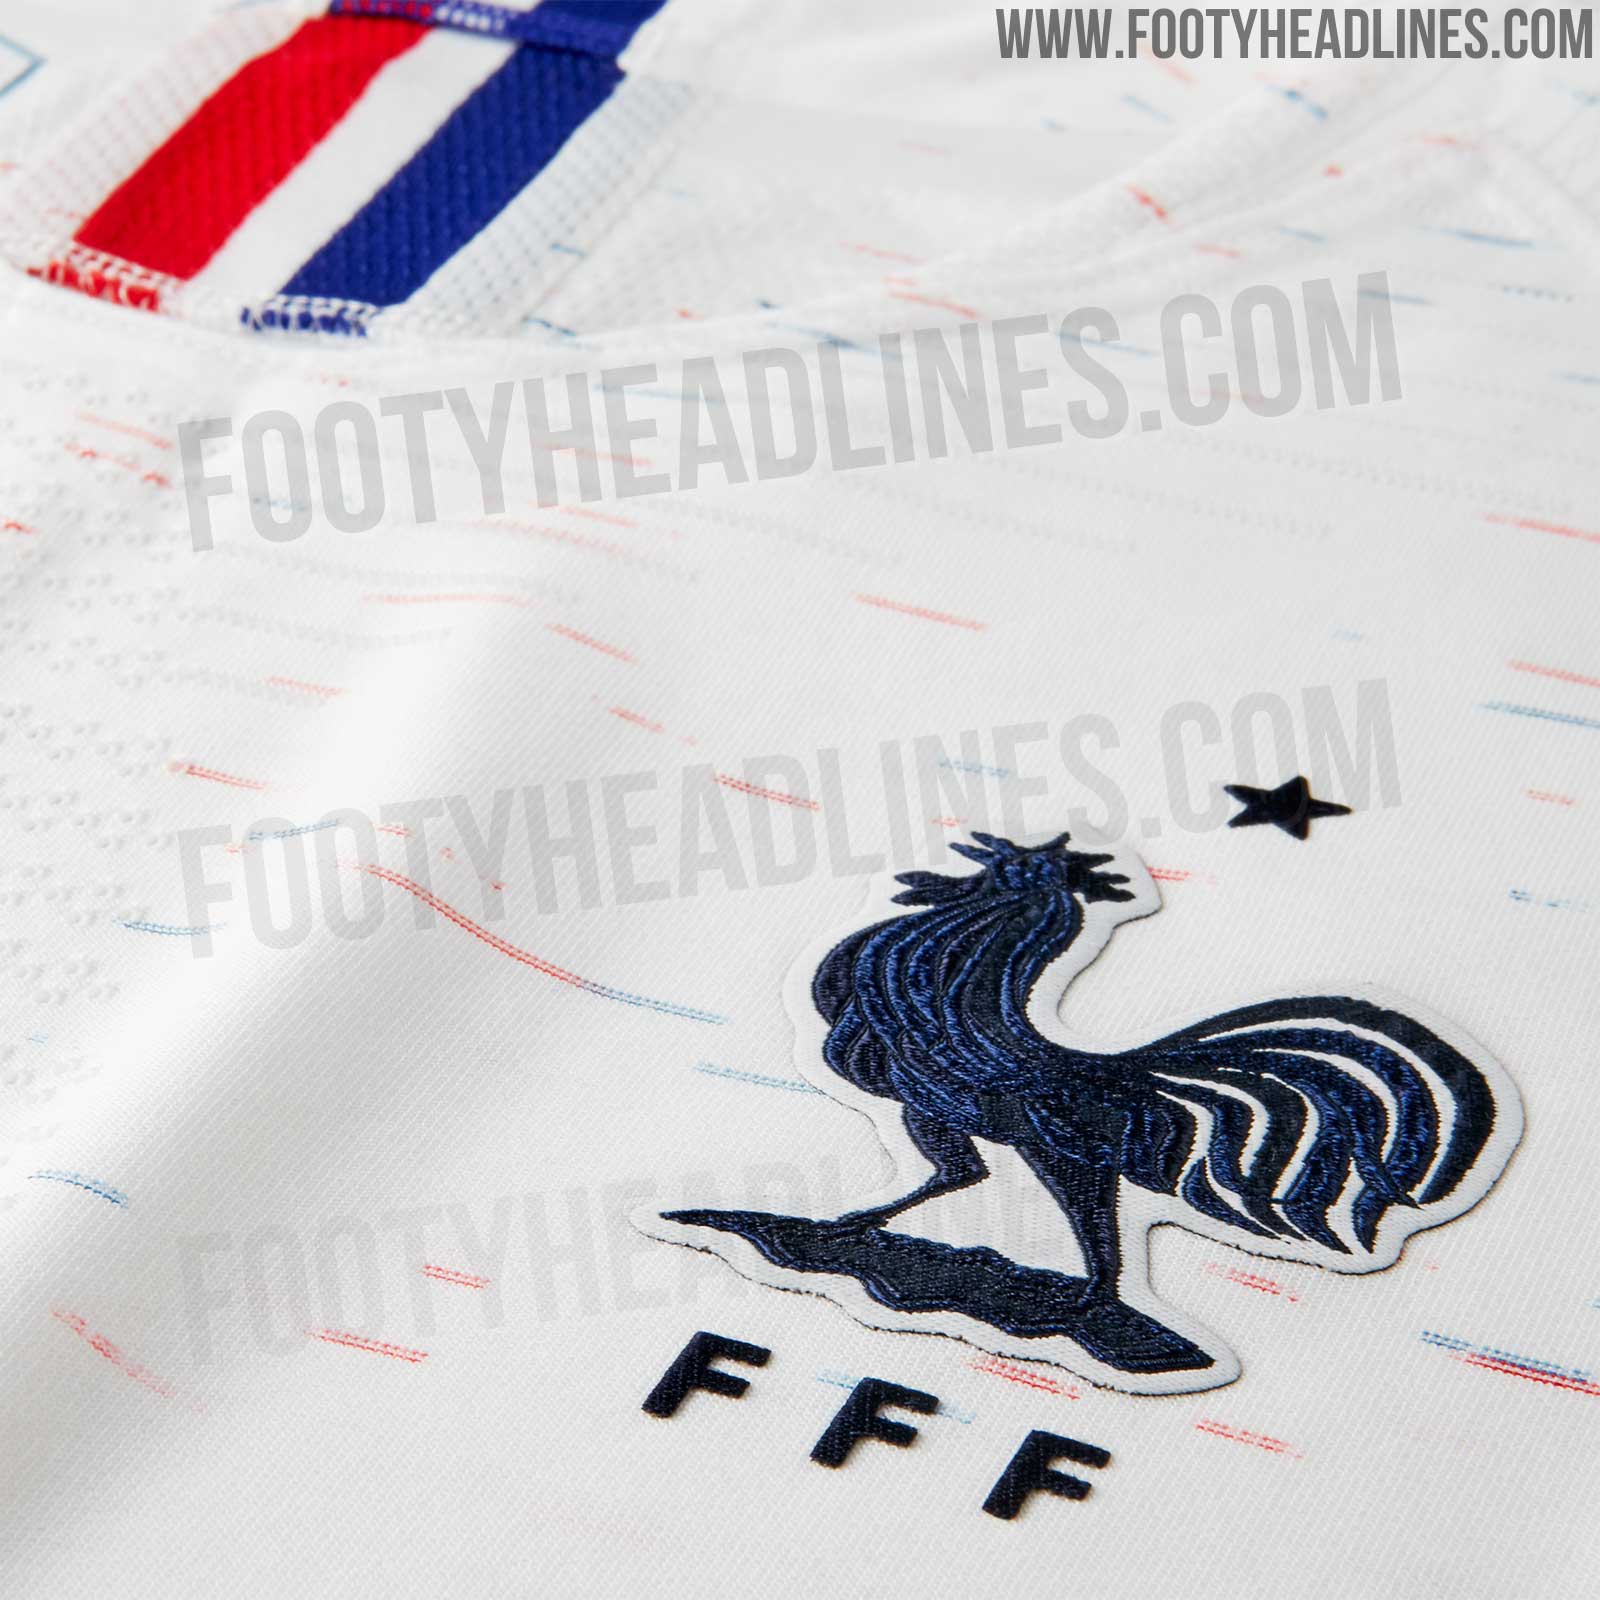 france-2018-world-cup-away-kit-4.jpg